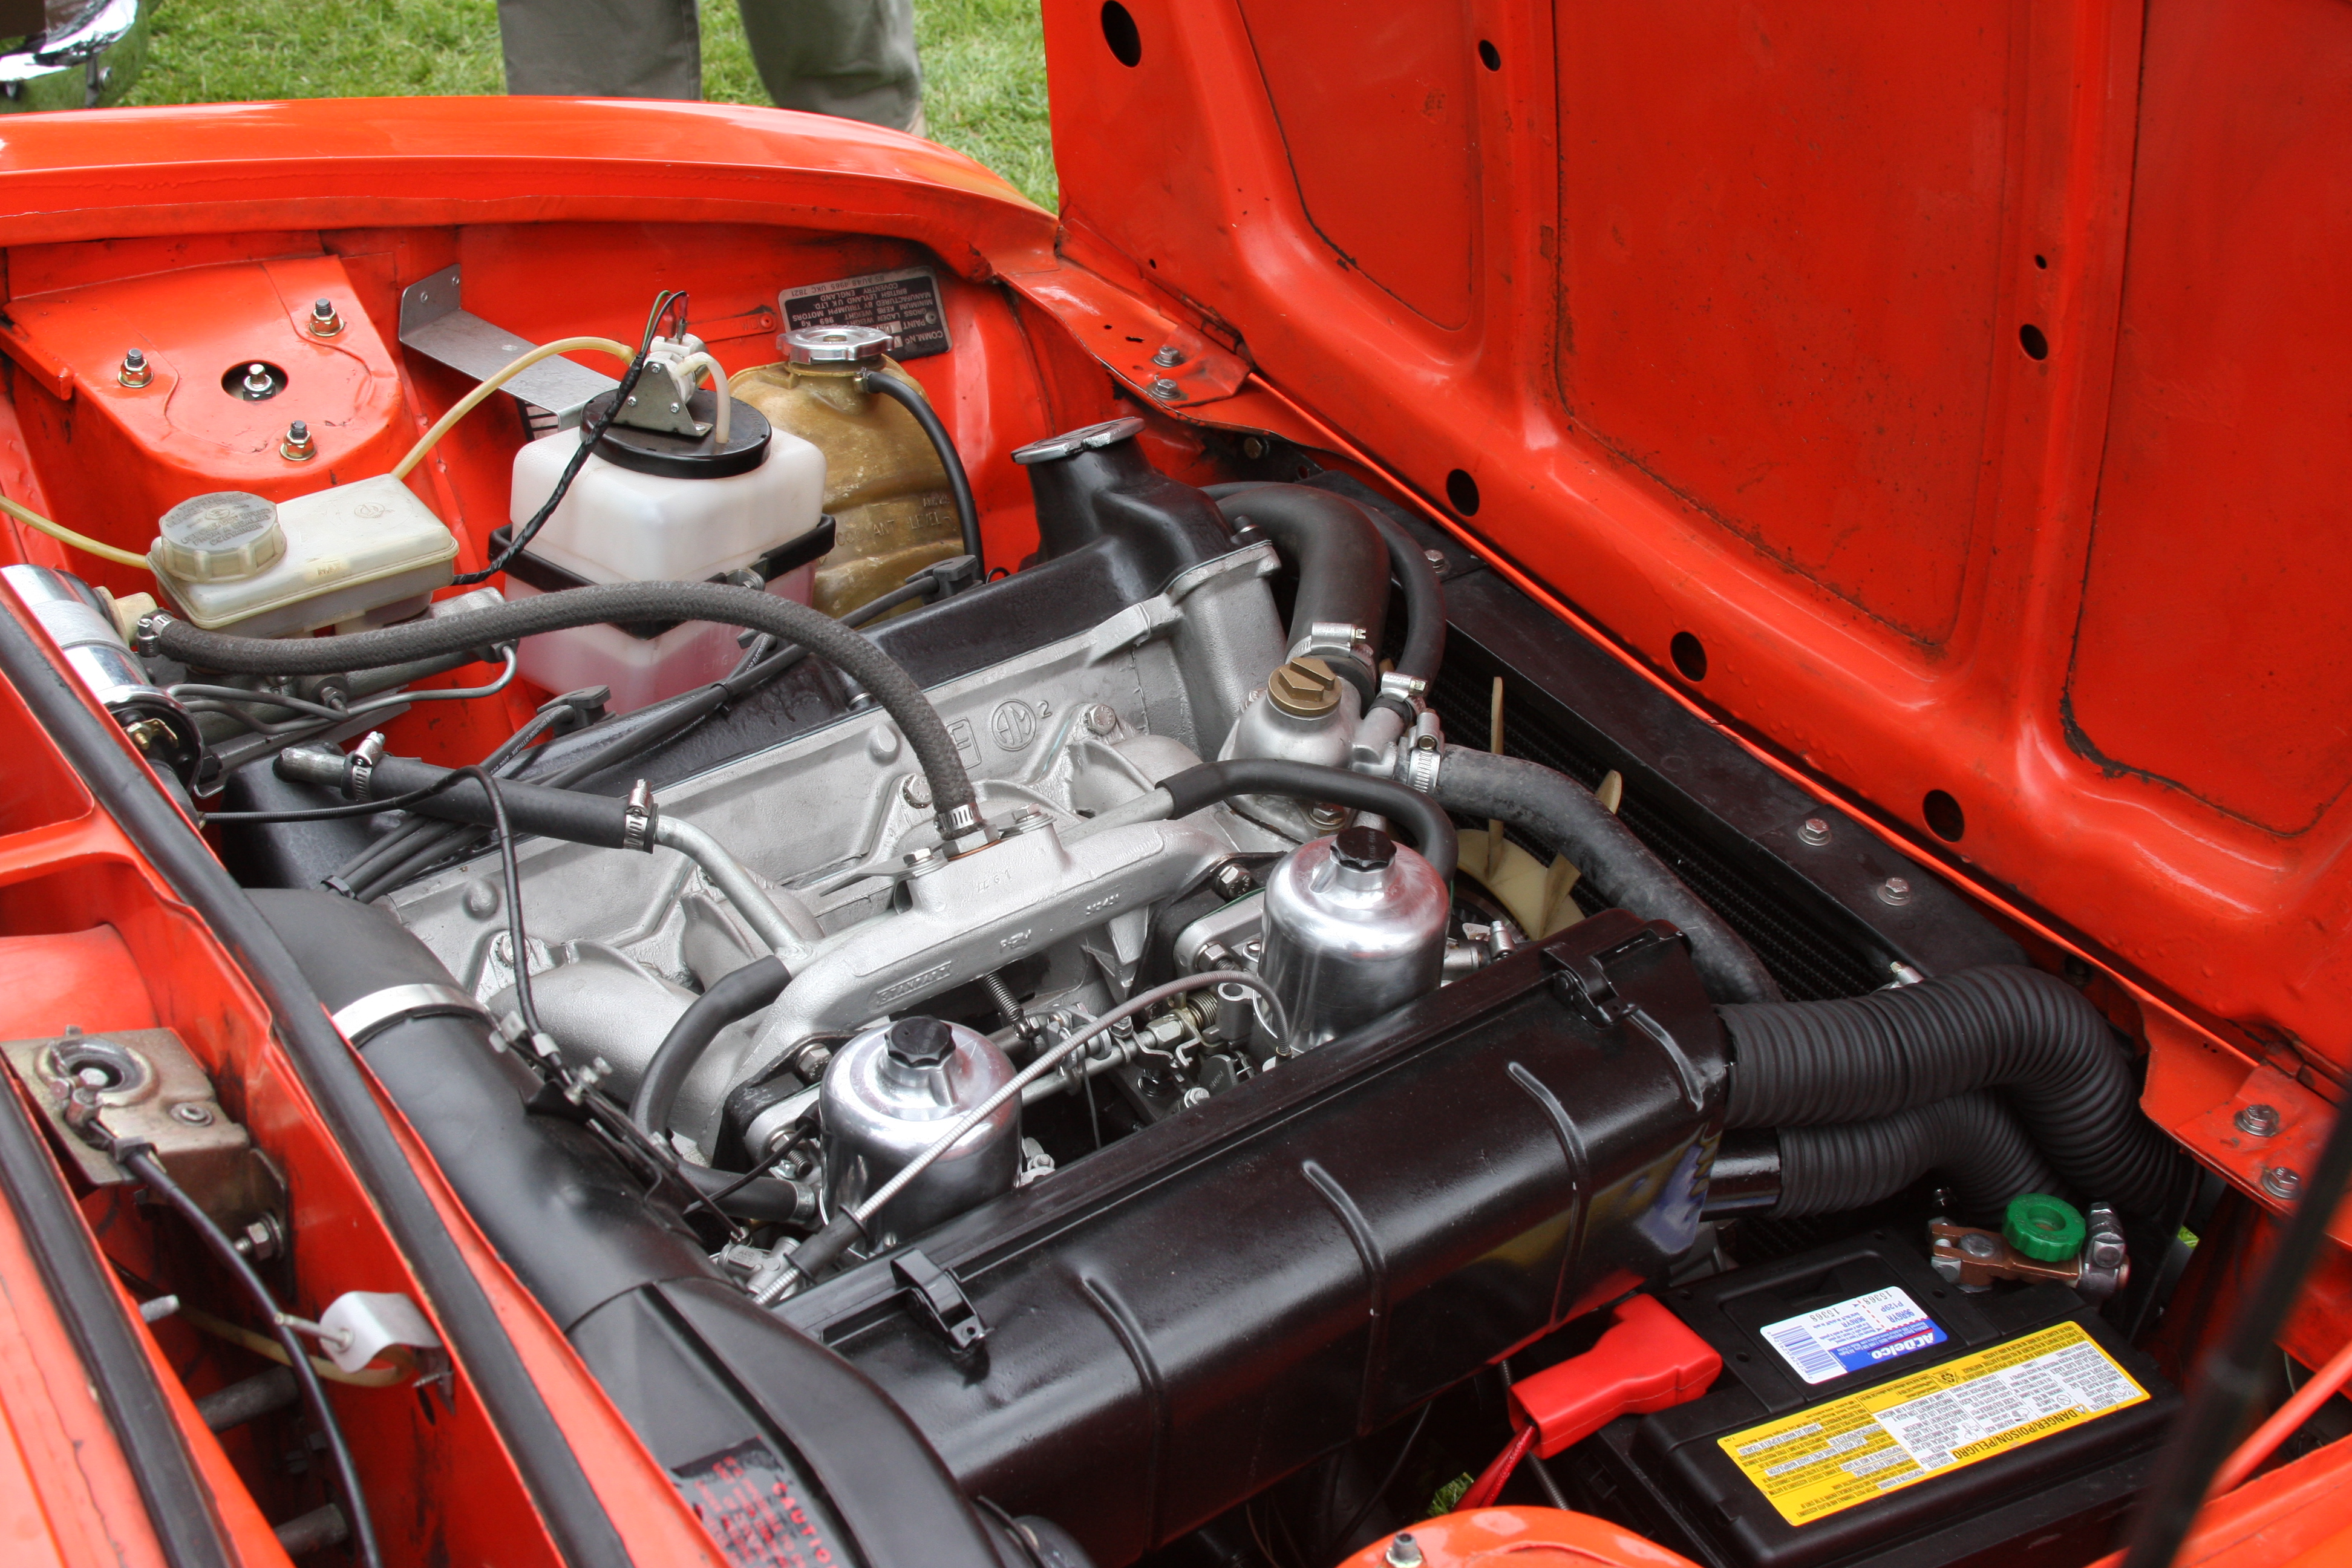 File:1980 Triumph Dolomite engine (4658402751).jpg - Wikimedia